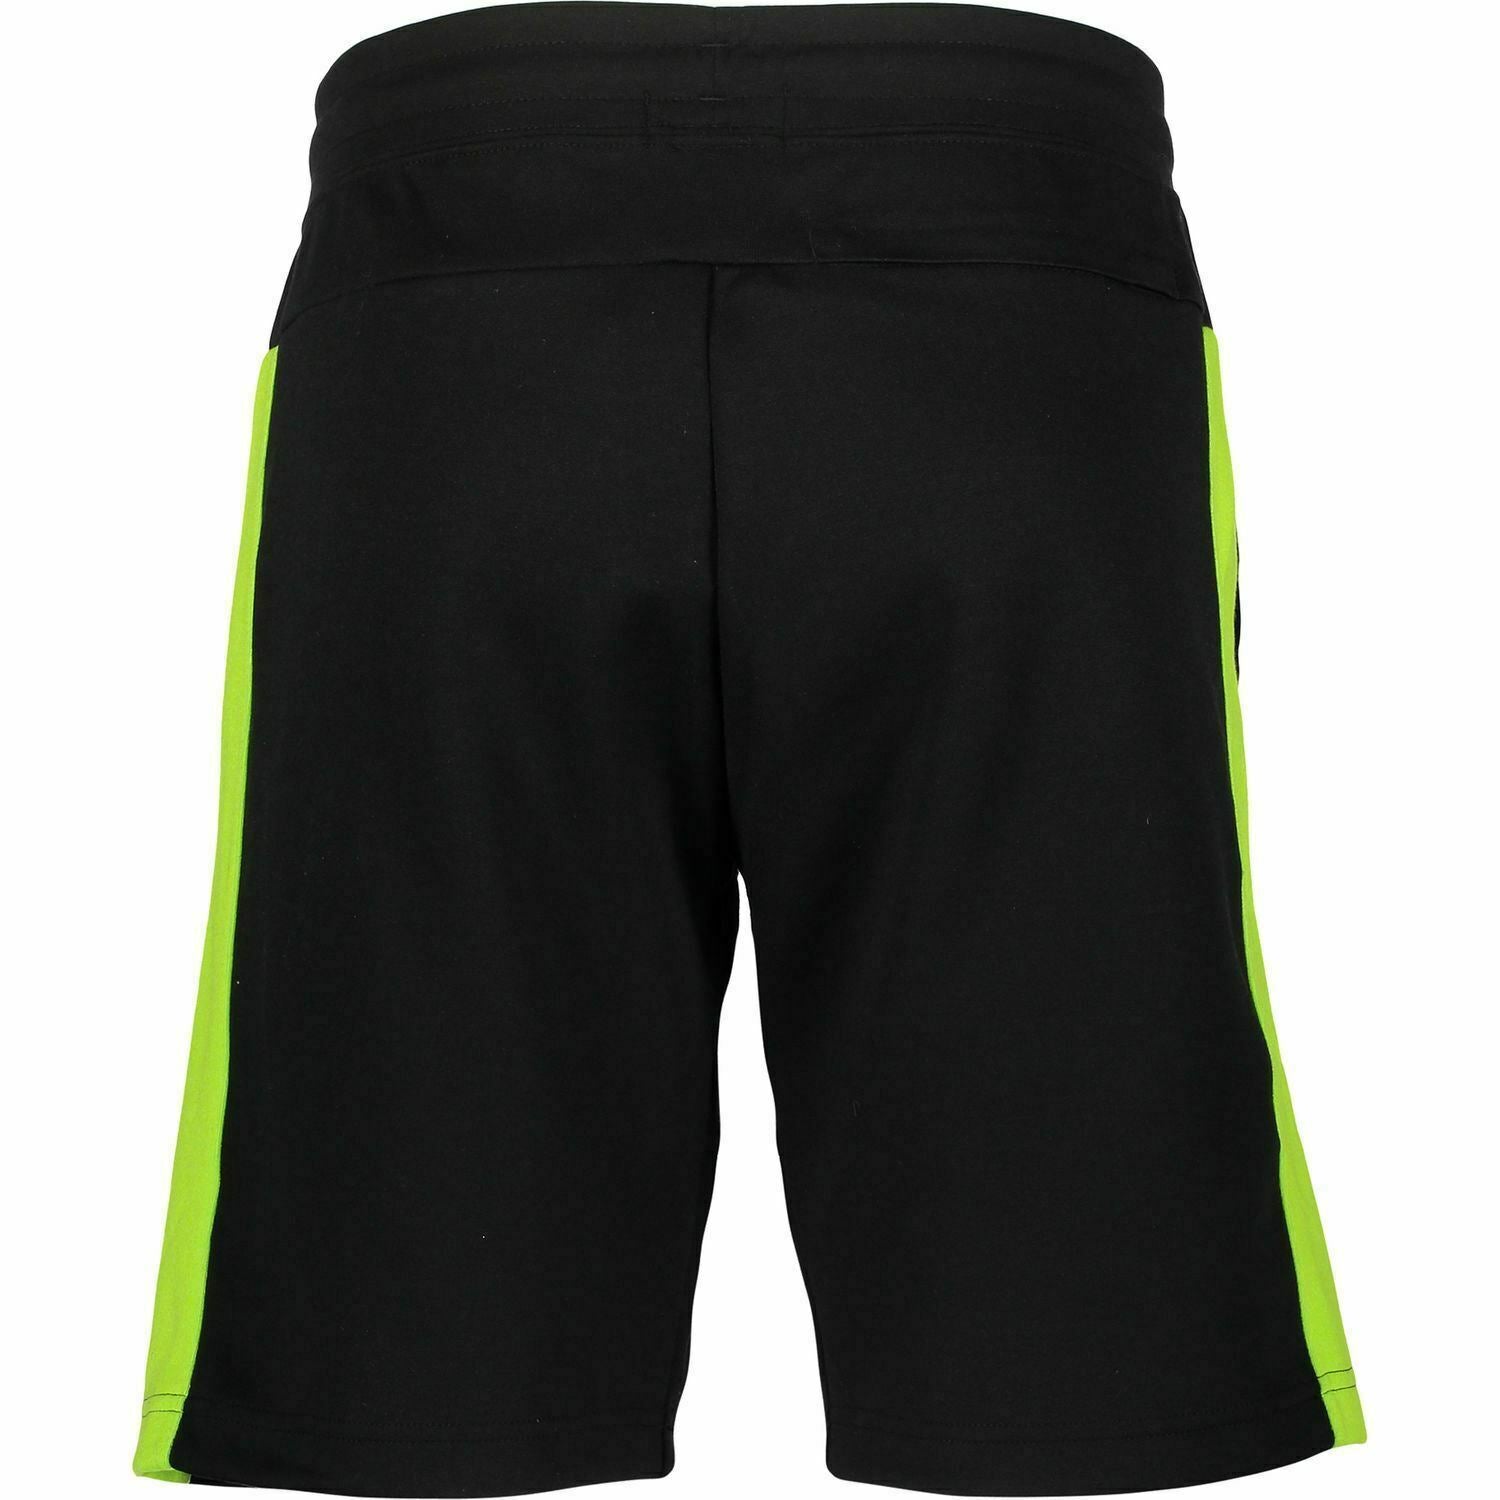 POLO RALPH LAUREN Men's Black & Lime Shorts W30